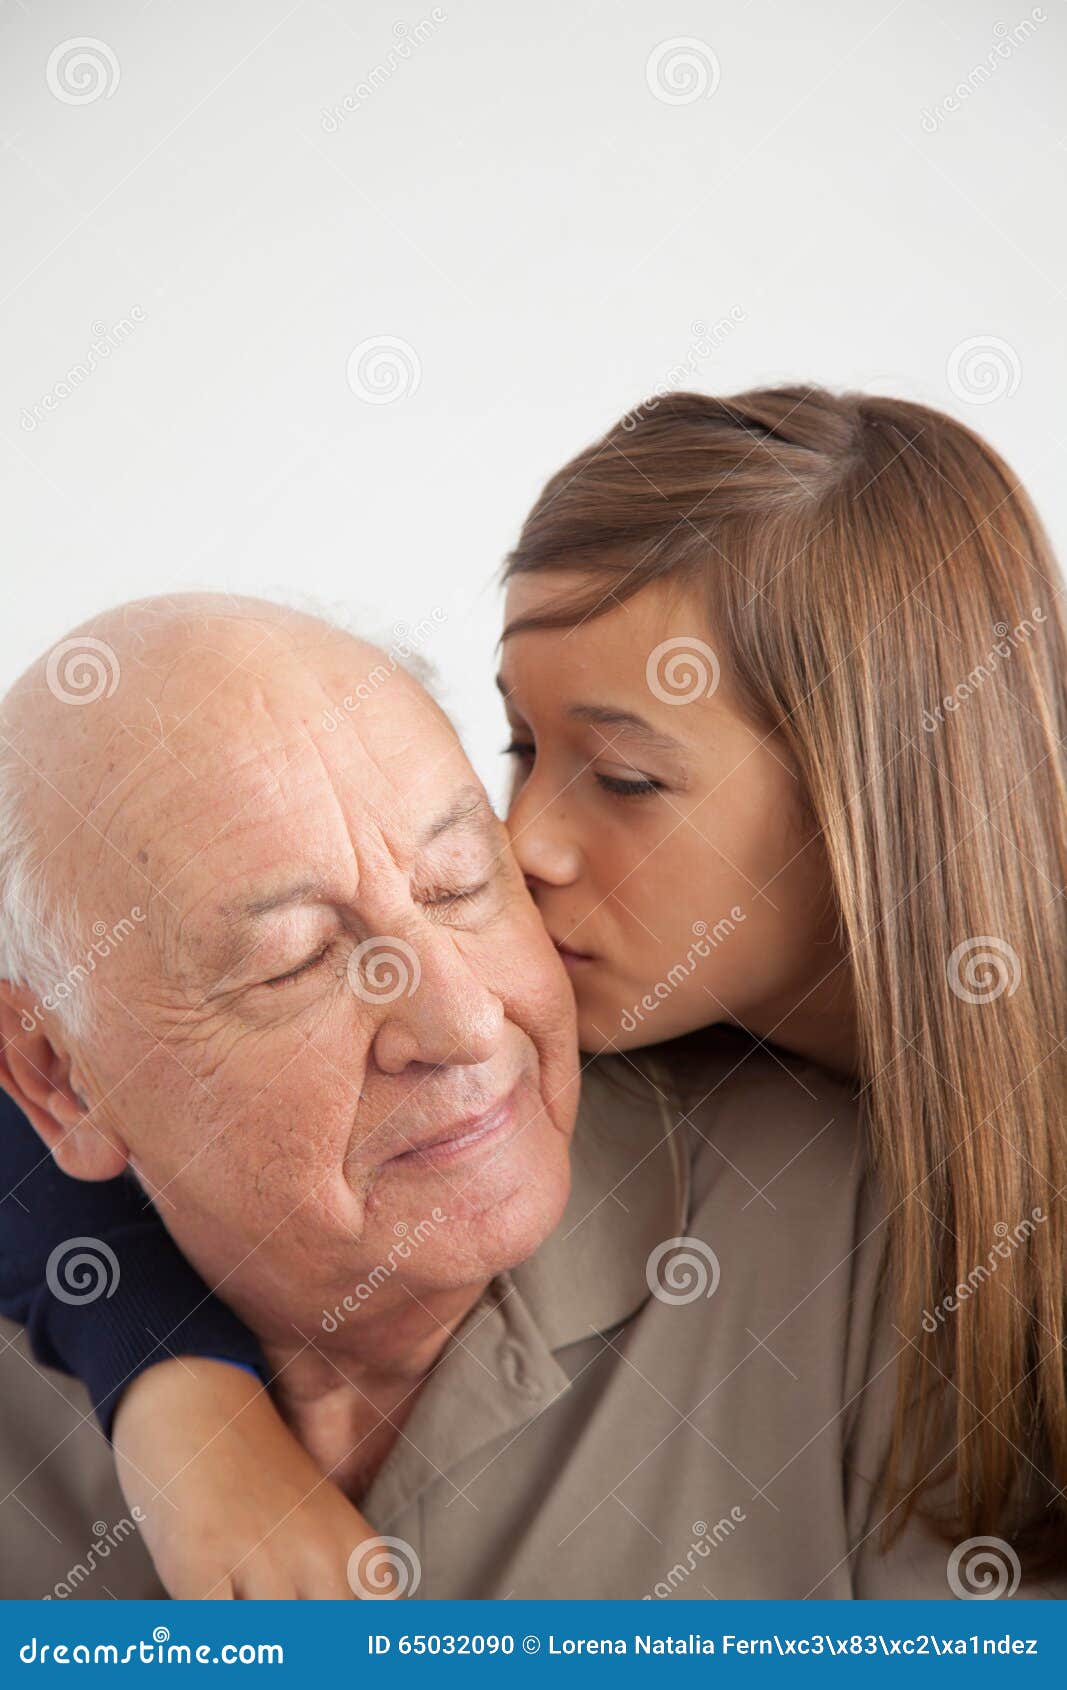 Поцелую дедушку. Поцелуй дедушка. Поцелуй дедушки и девушки. Поцелуй дед и девушка. Девушка целует Деда.